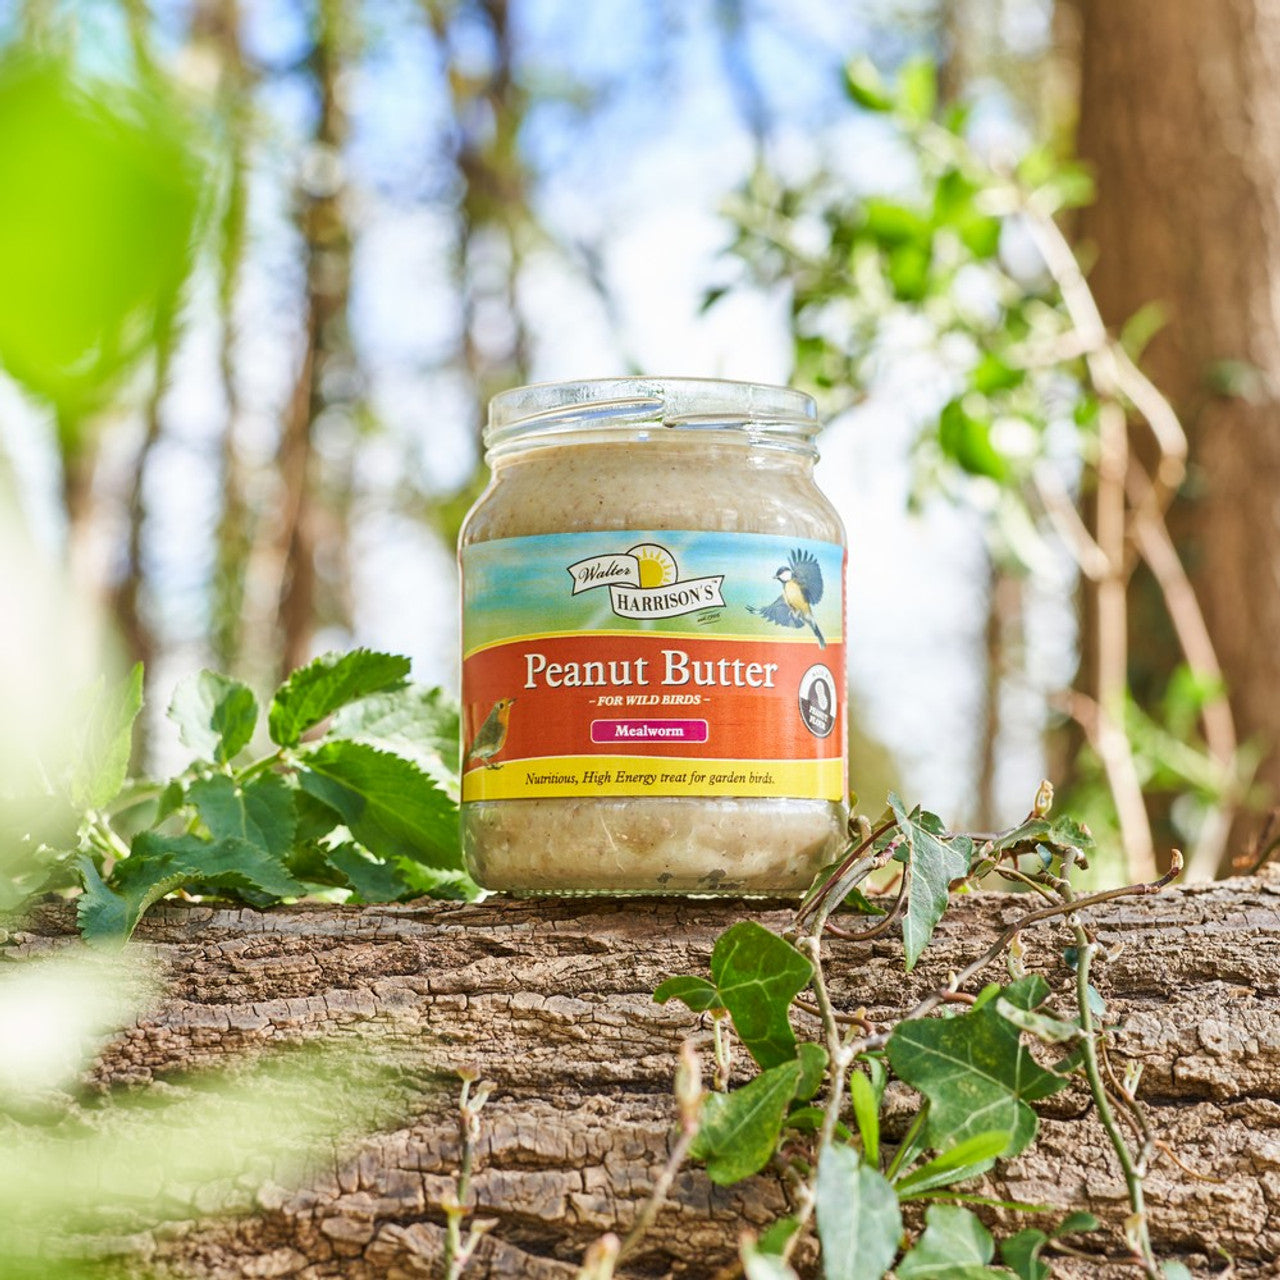 Harrisons Original Peanut Butter Jar for Wild Birds